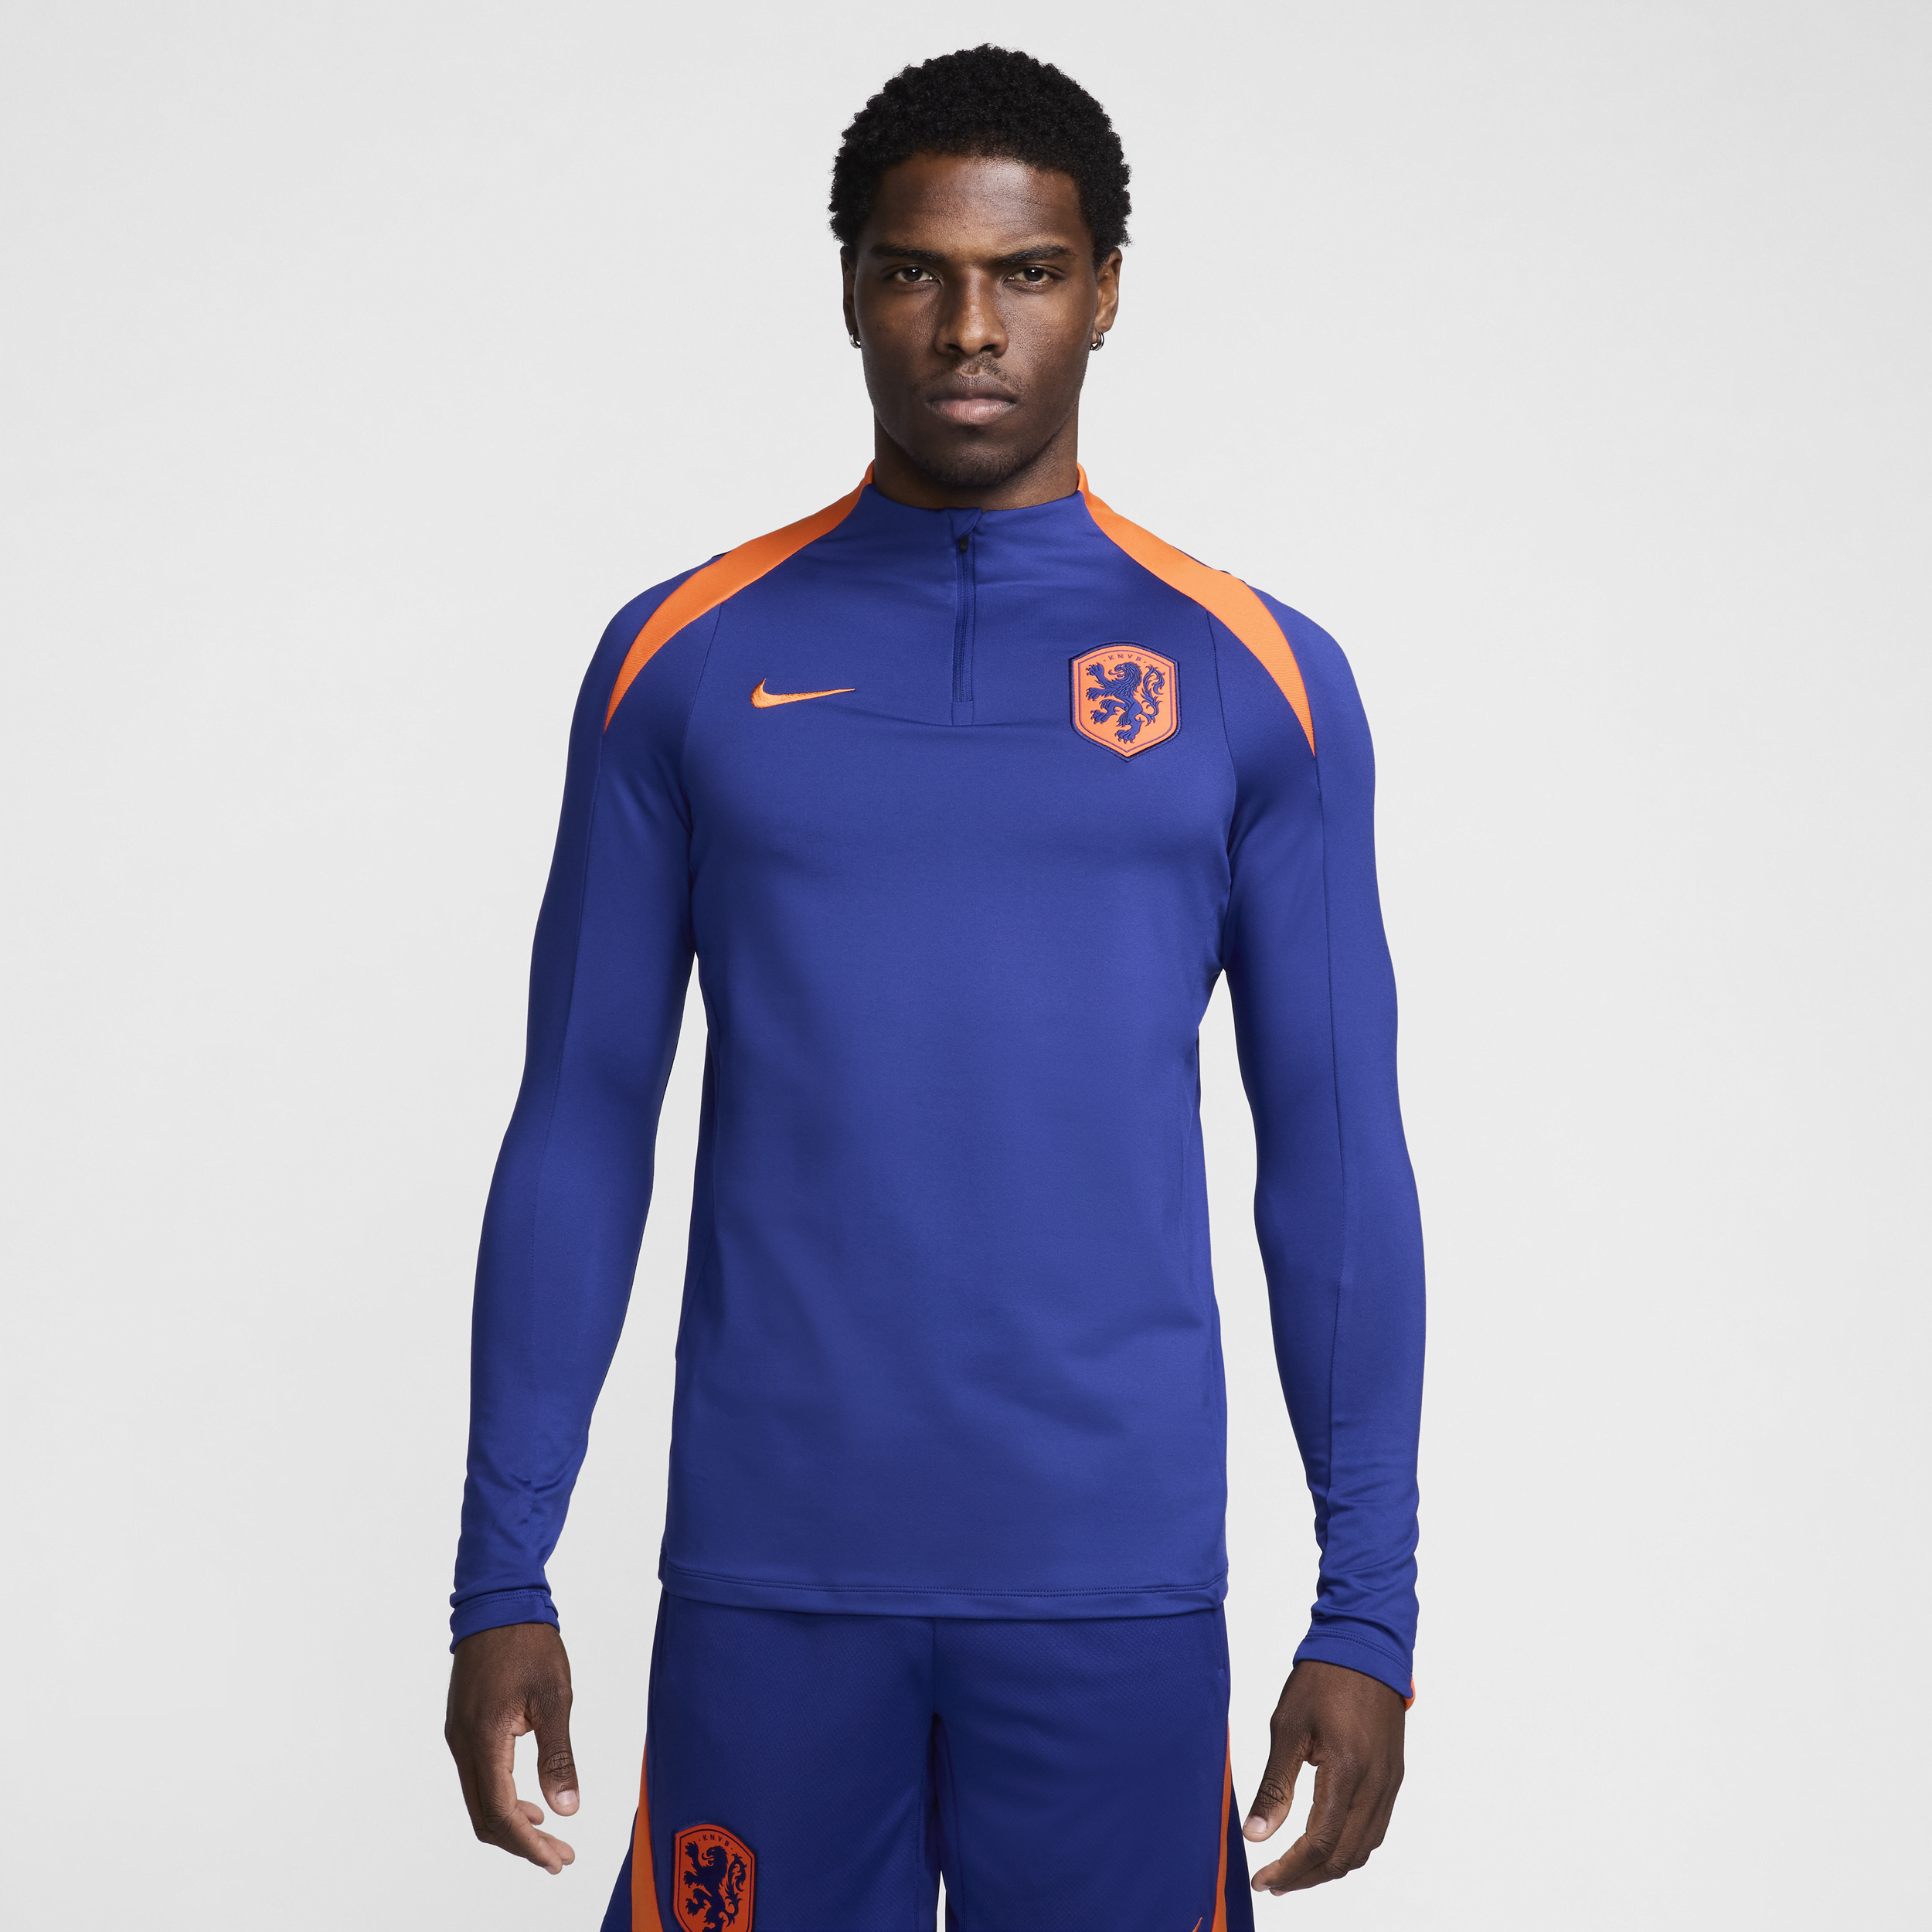 Nederland Strike Nike Dri-FIT voetbaltrainingstop voor heren - Blauw